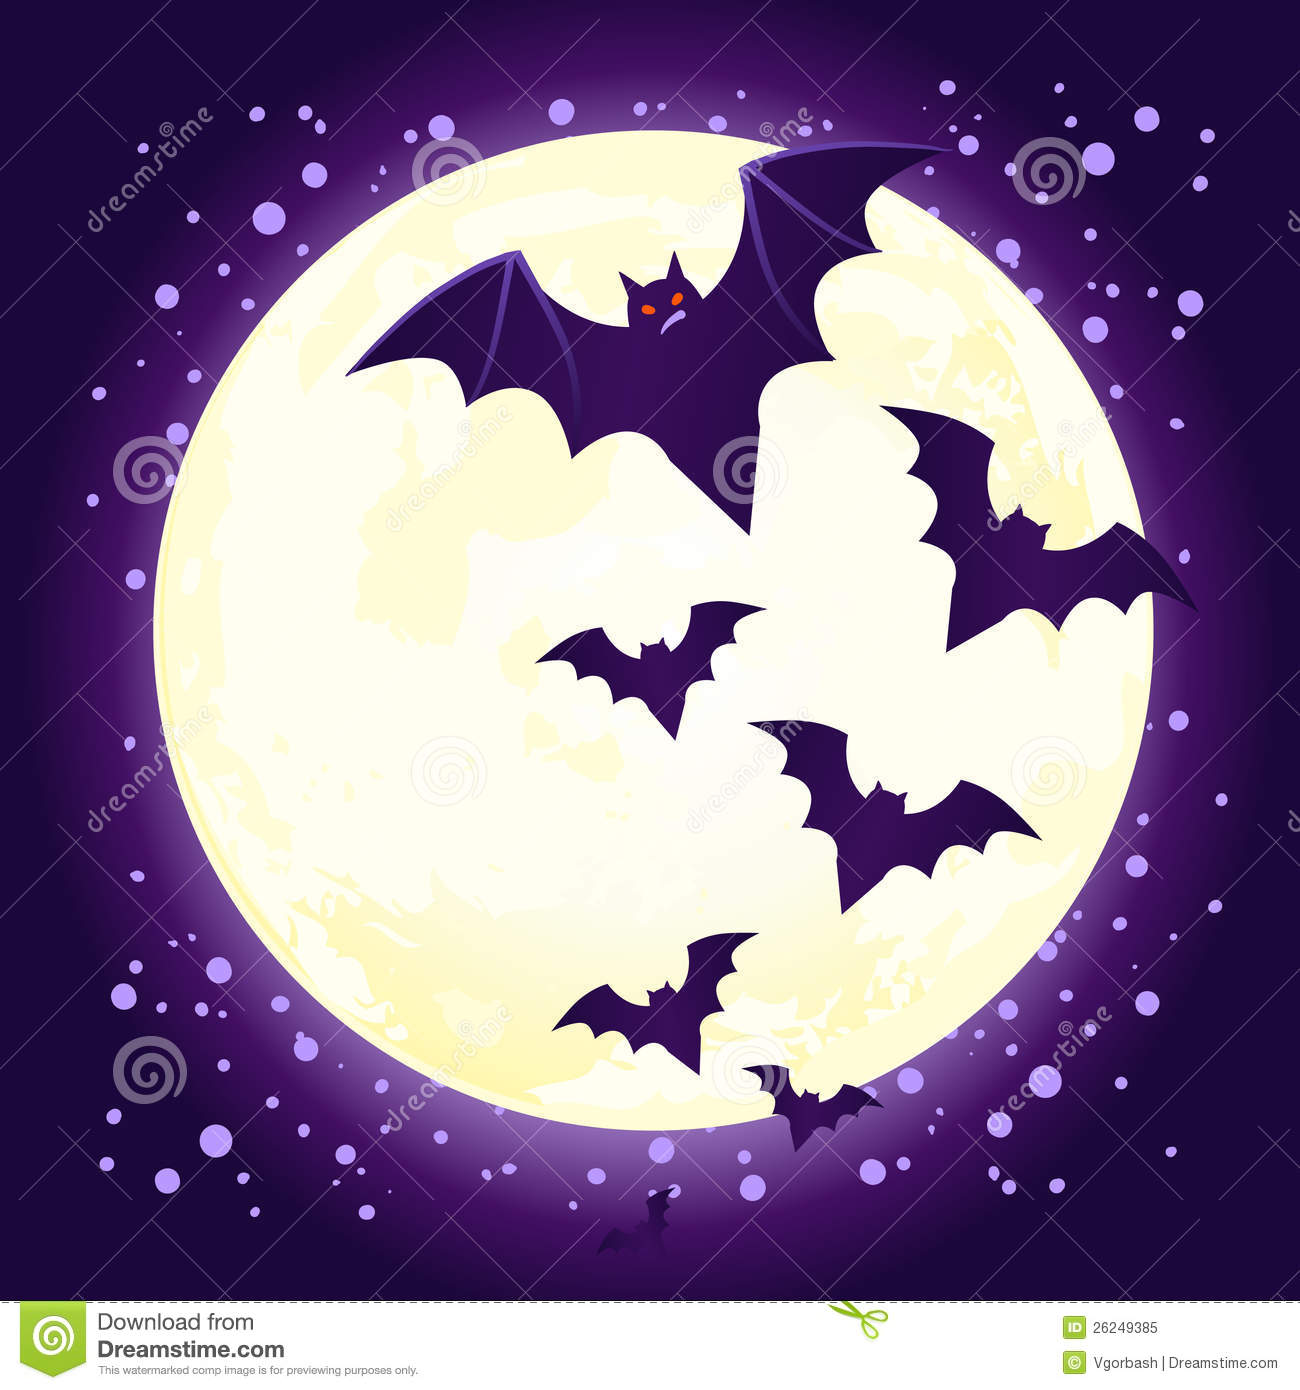 Halloween Cute Bat Flying Against Full Moon Royalty Free Stock Photo    